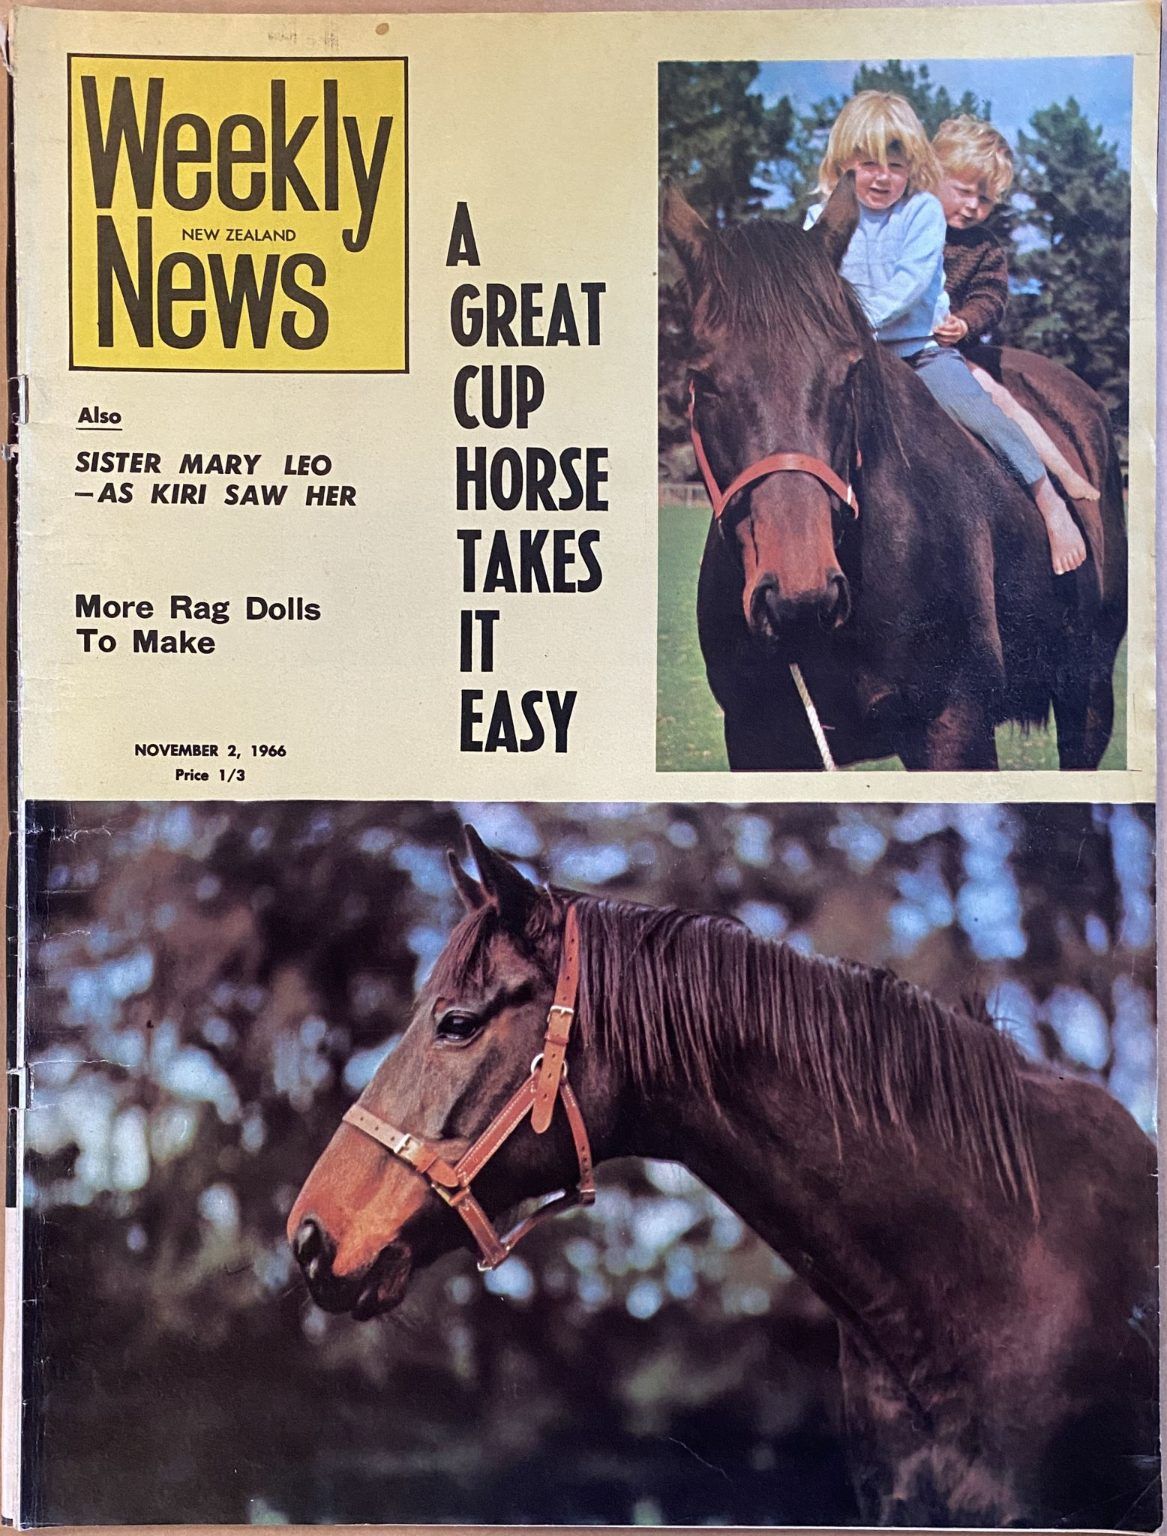 OLD NEWSPAPER: New Zealand Weekly News, No. 5371, 2 November 1966